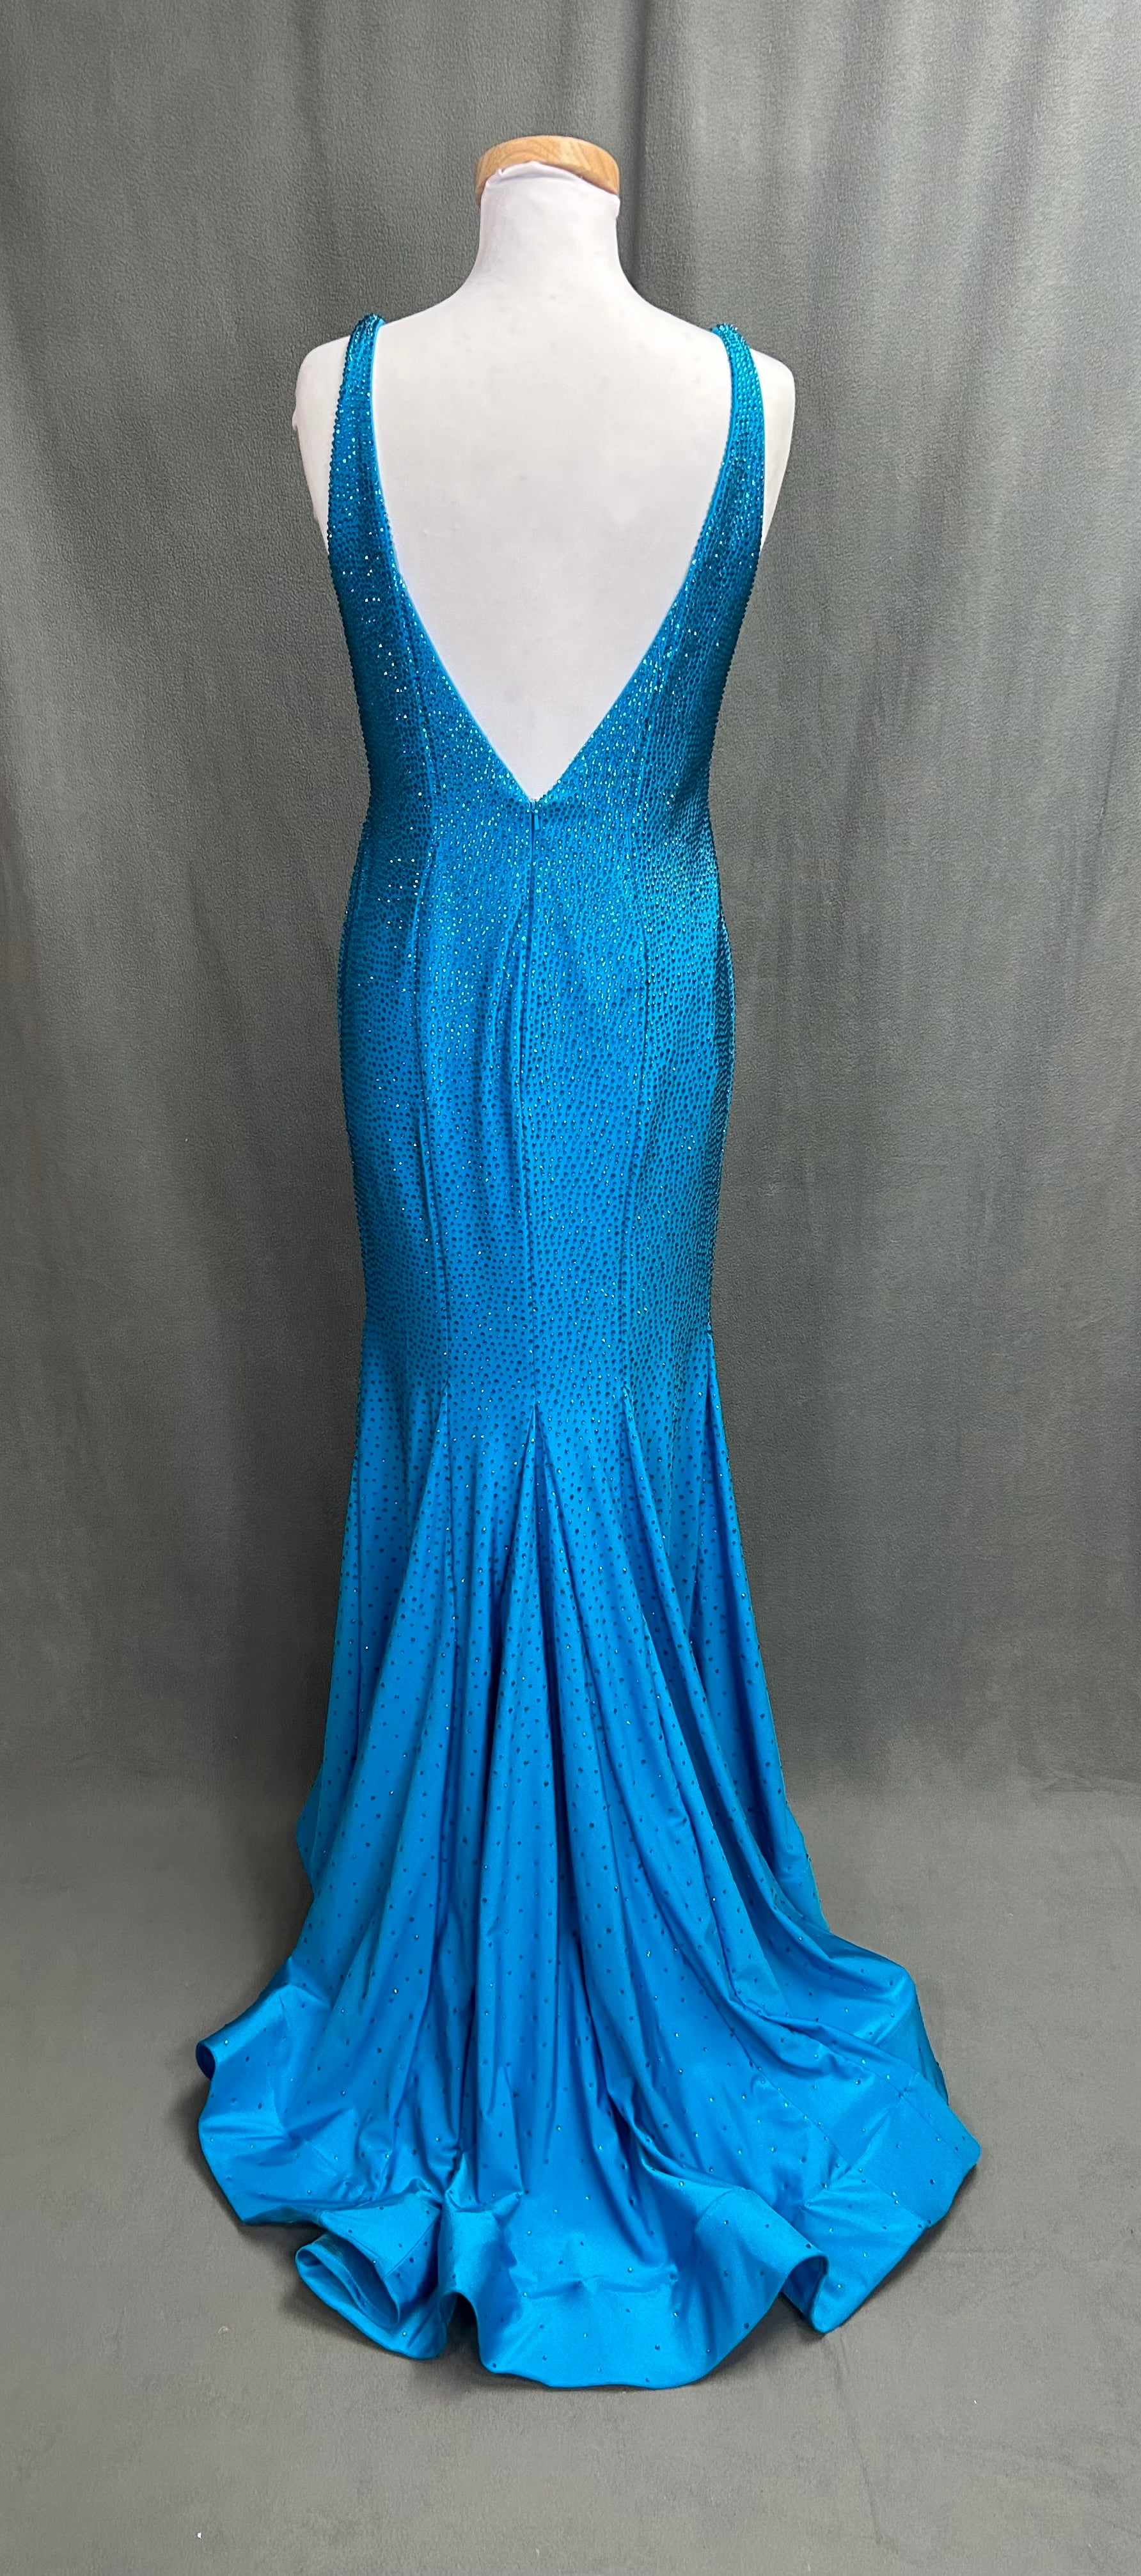 Sherri Hill blue dress, size 10